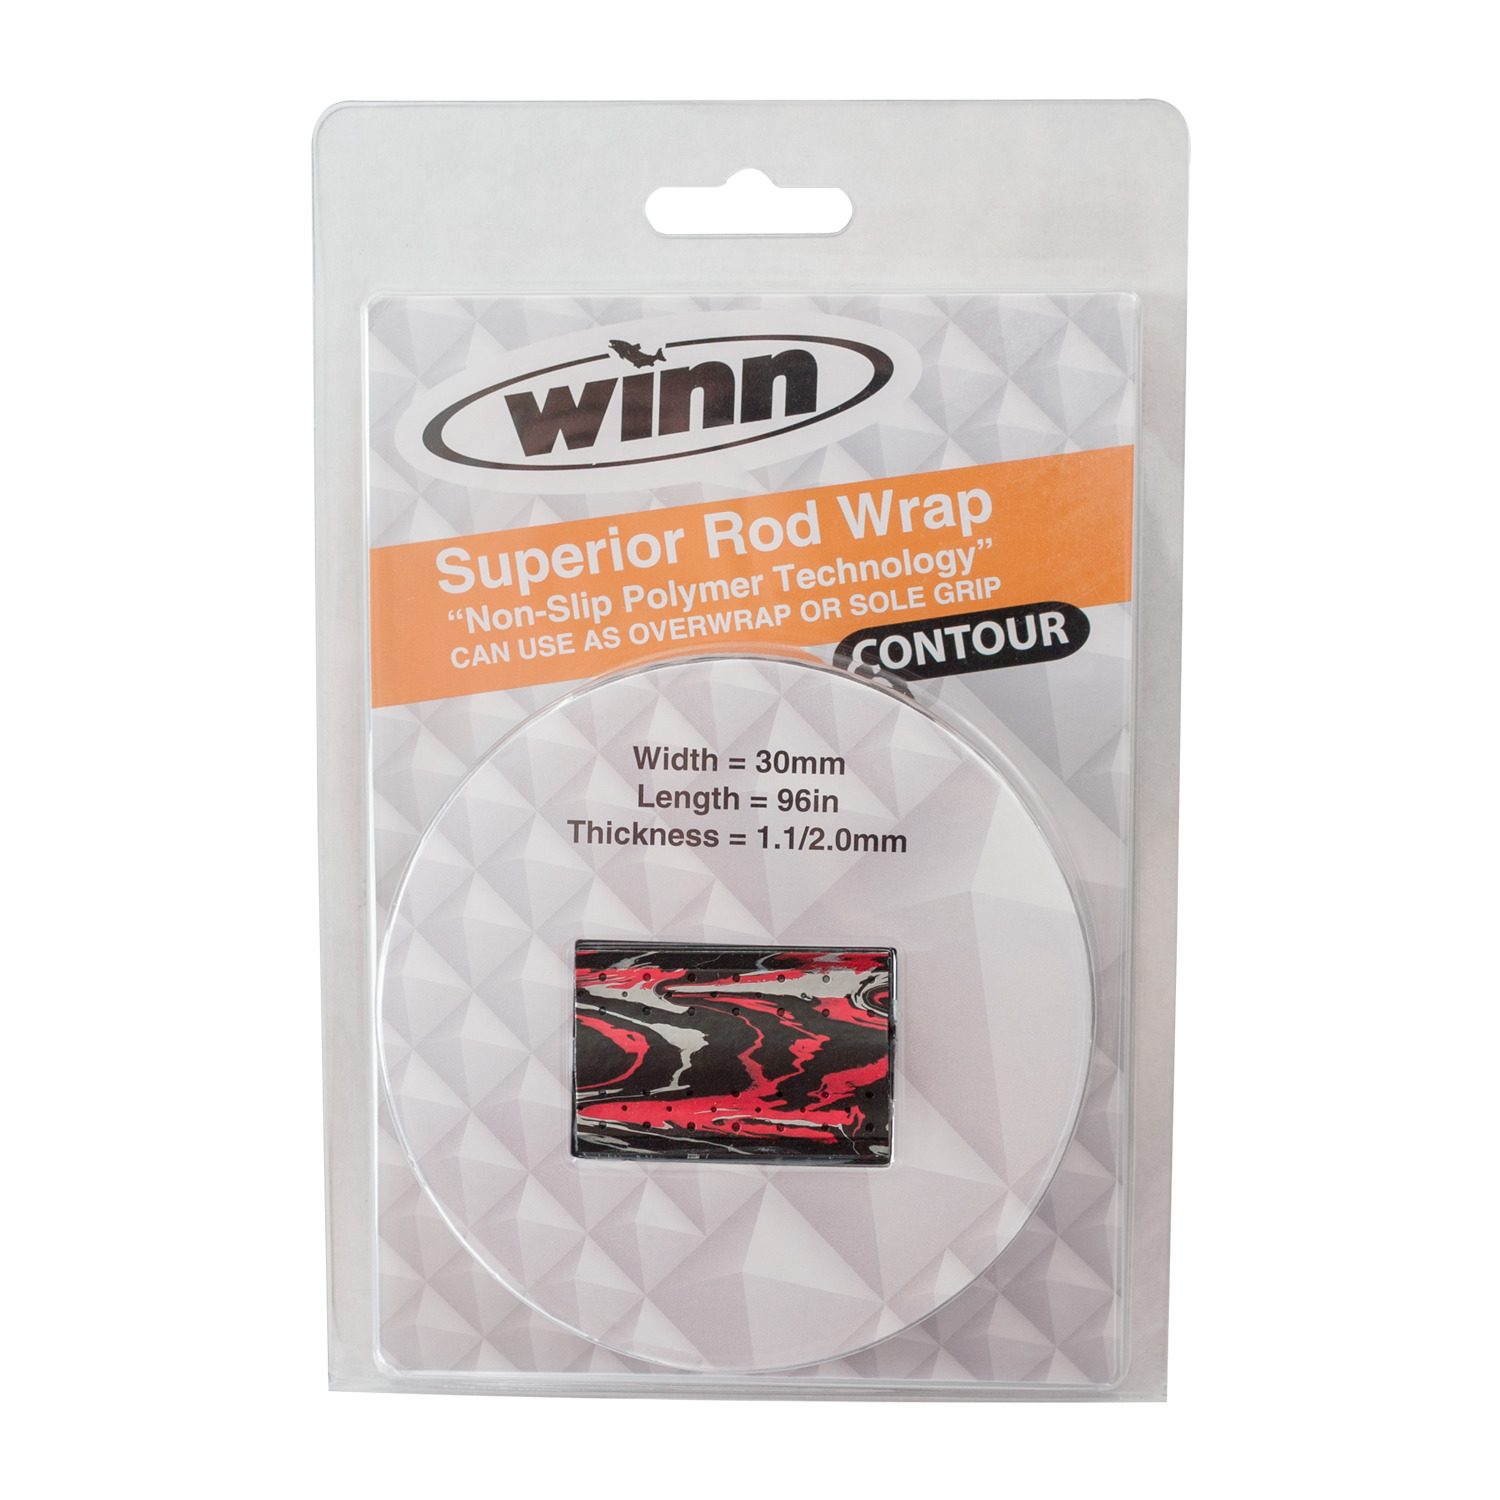 Winn Grips Contour Polymer Rod Grip Overwraps